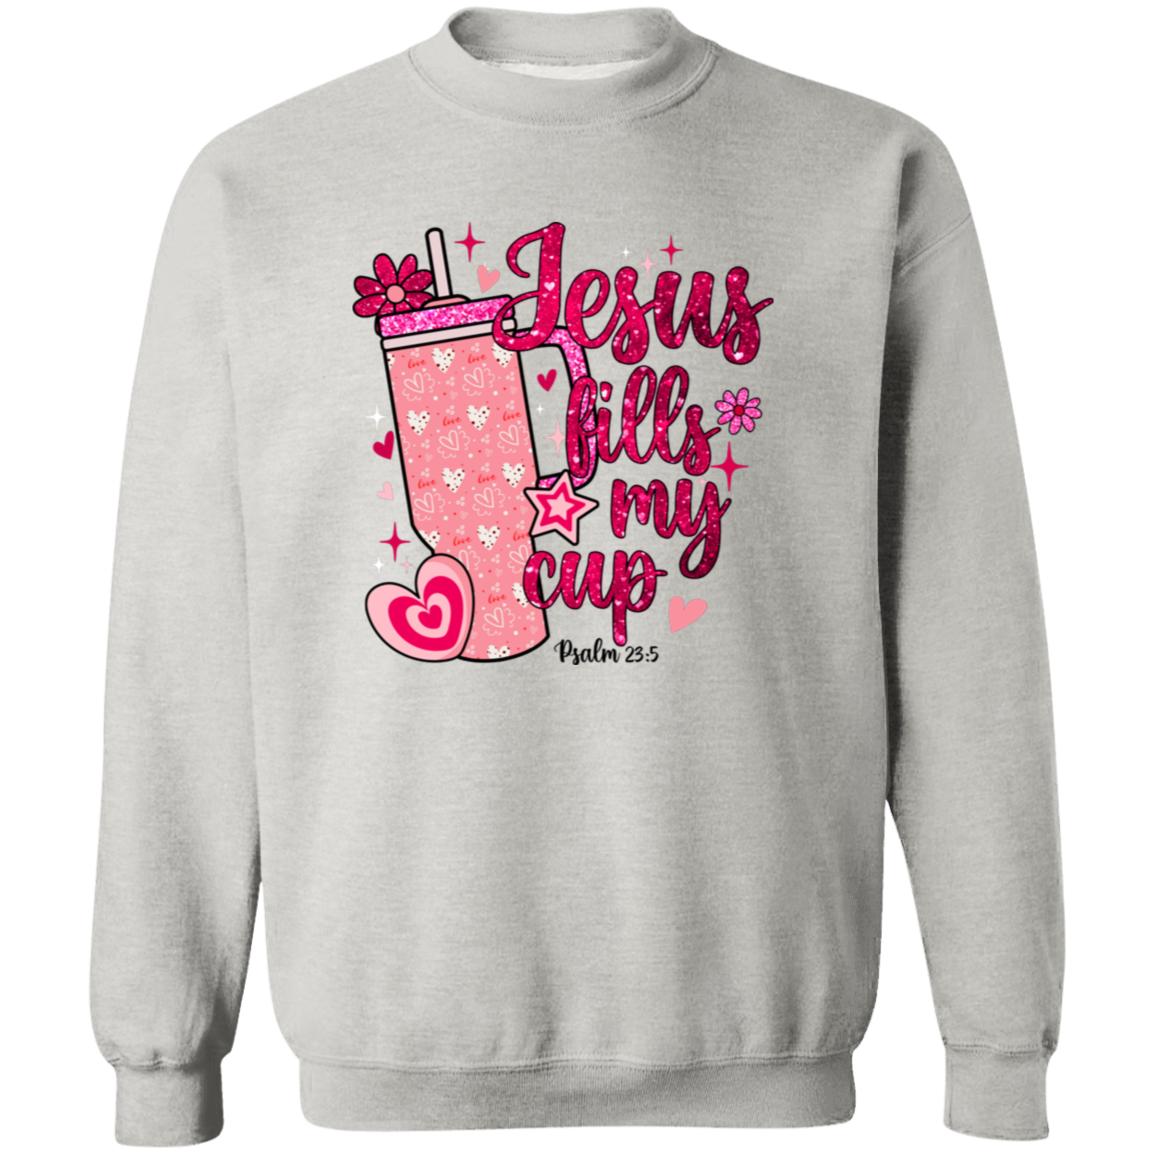 Jesus Fills My Cup Crewneck Pullover Sweatshirt